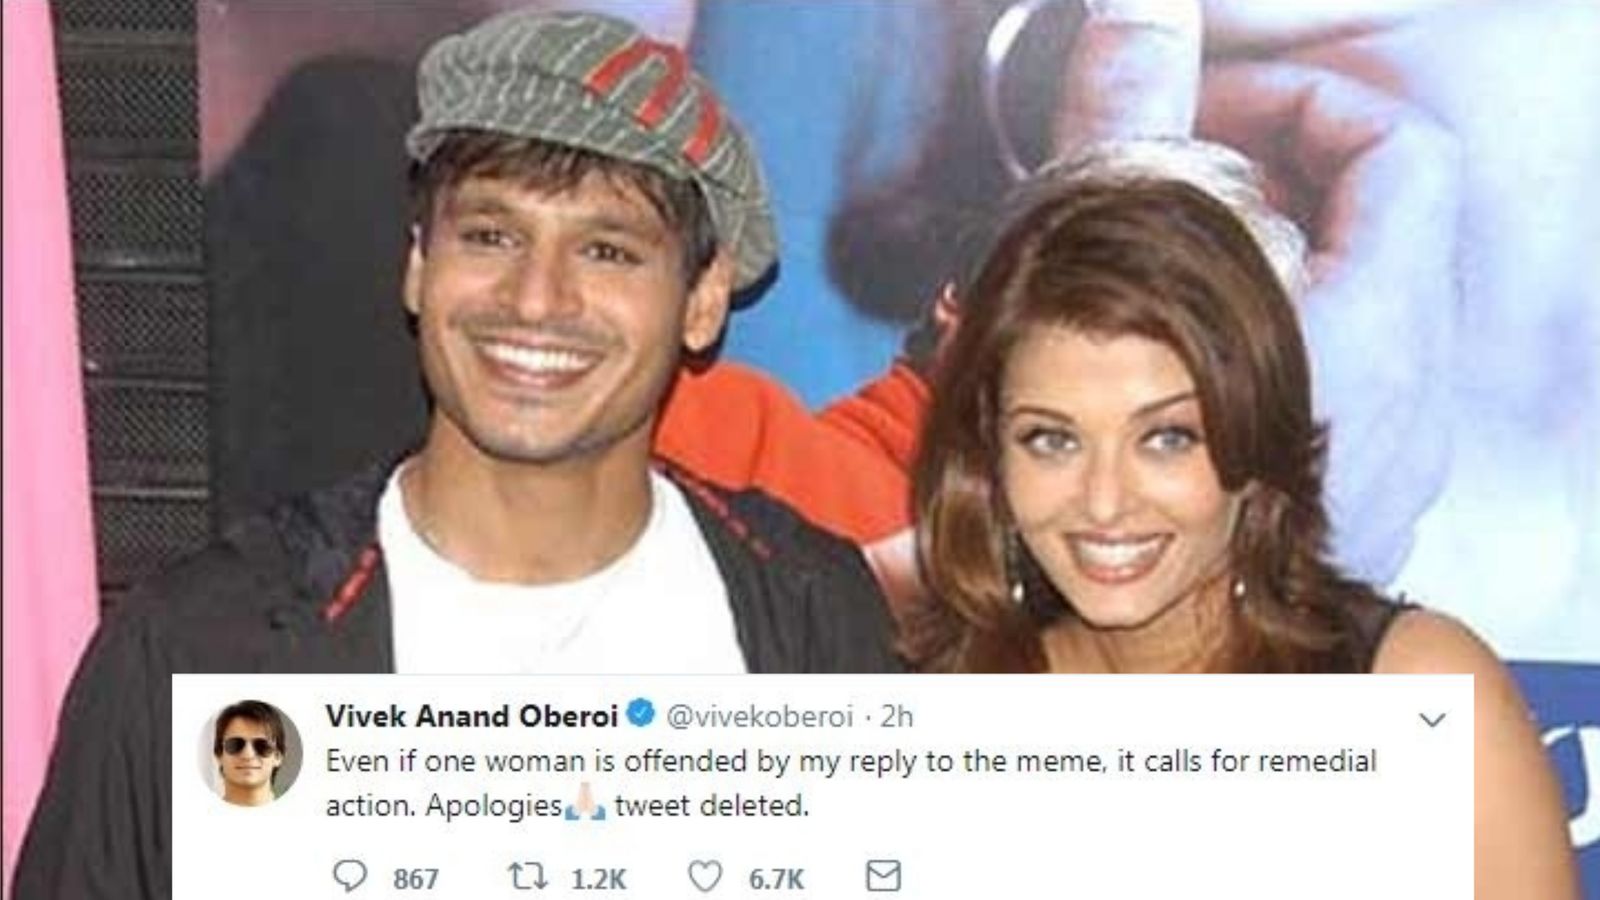 Vivek Oberoi Says Sorry For Meme On Aishwarya Rai And Salman Khan, Deletes It